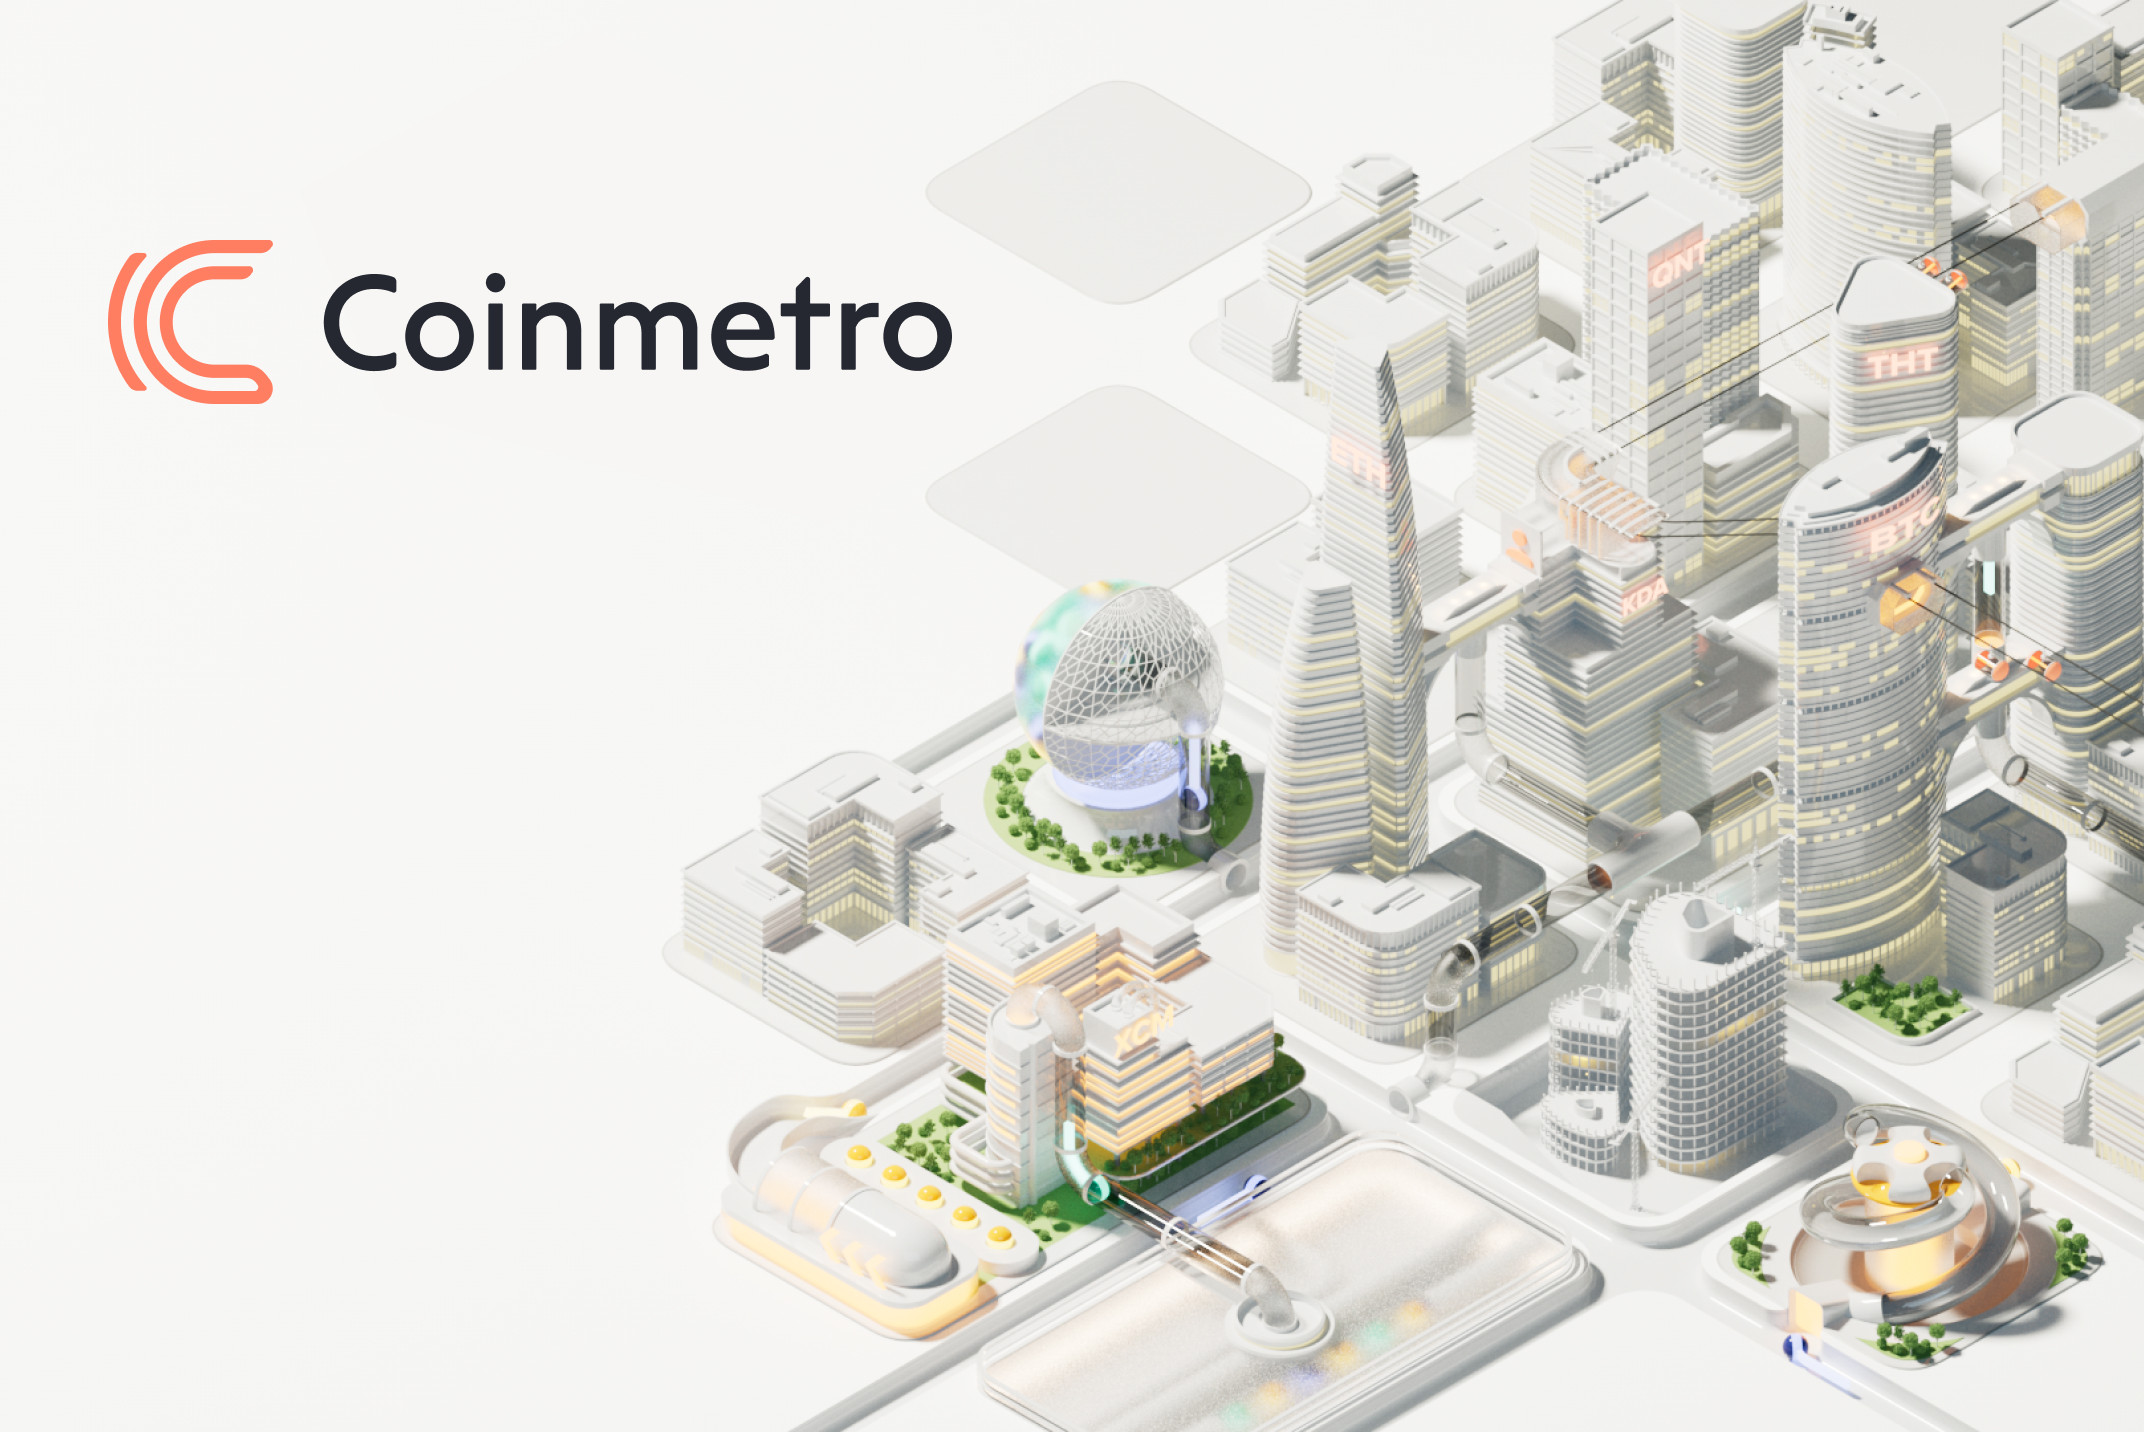 Coinmetro metropolis design by DUX